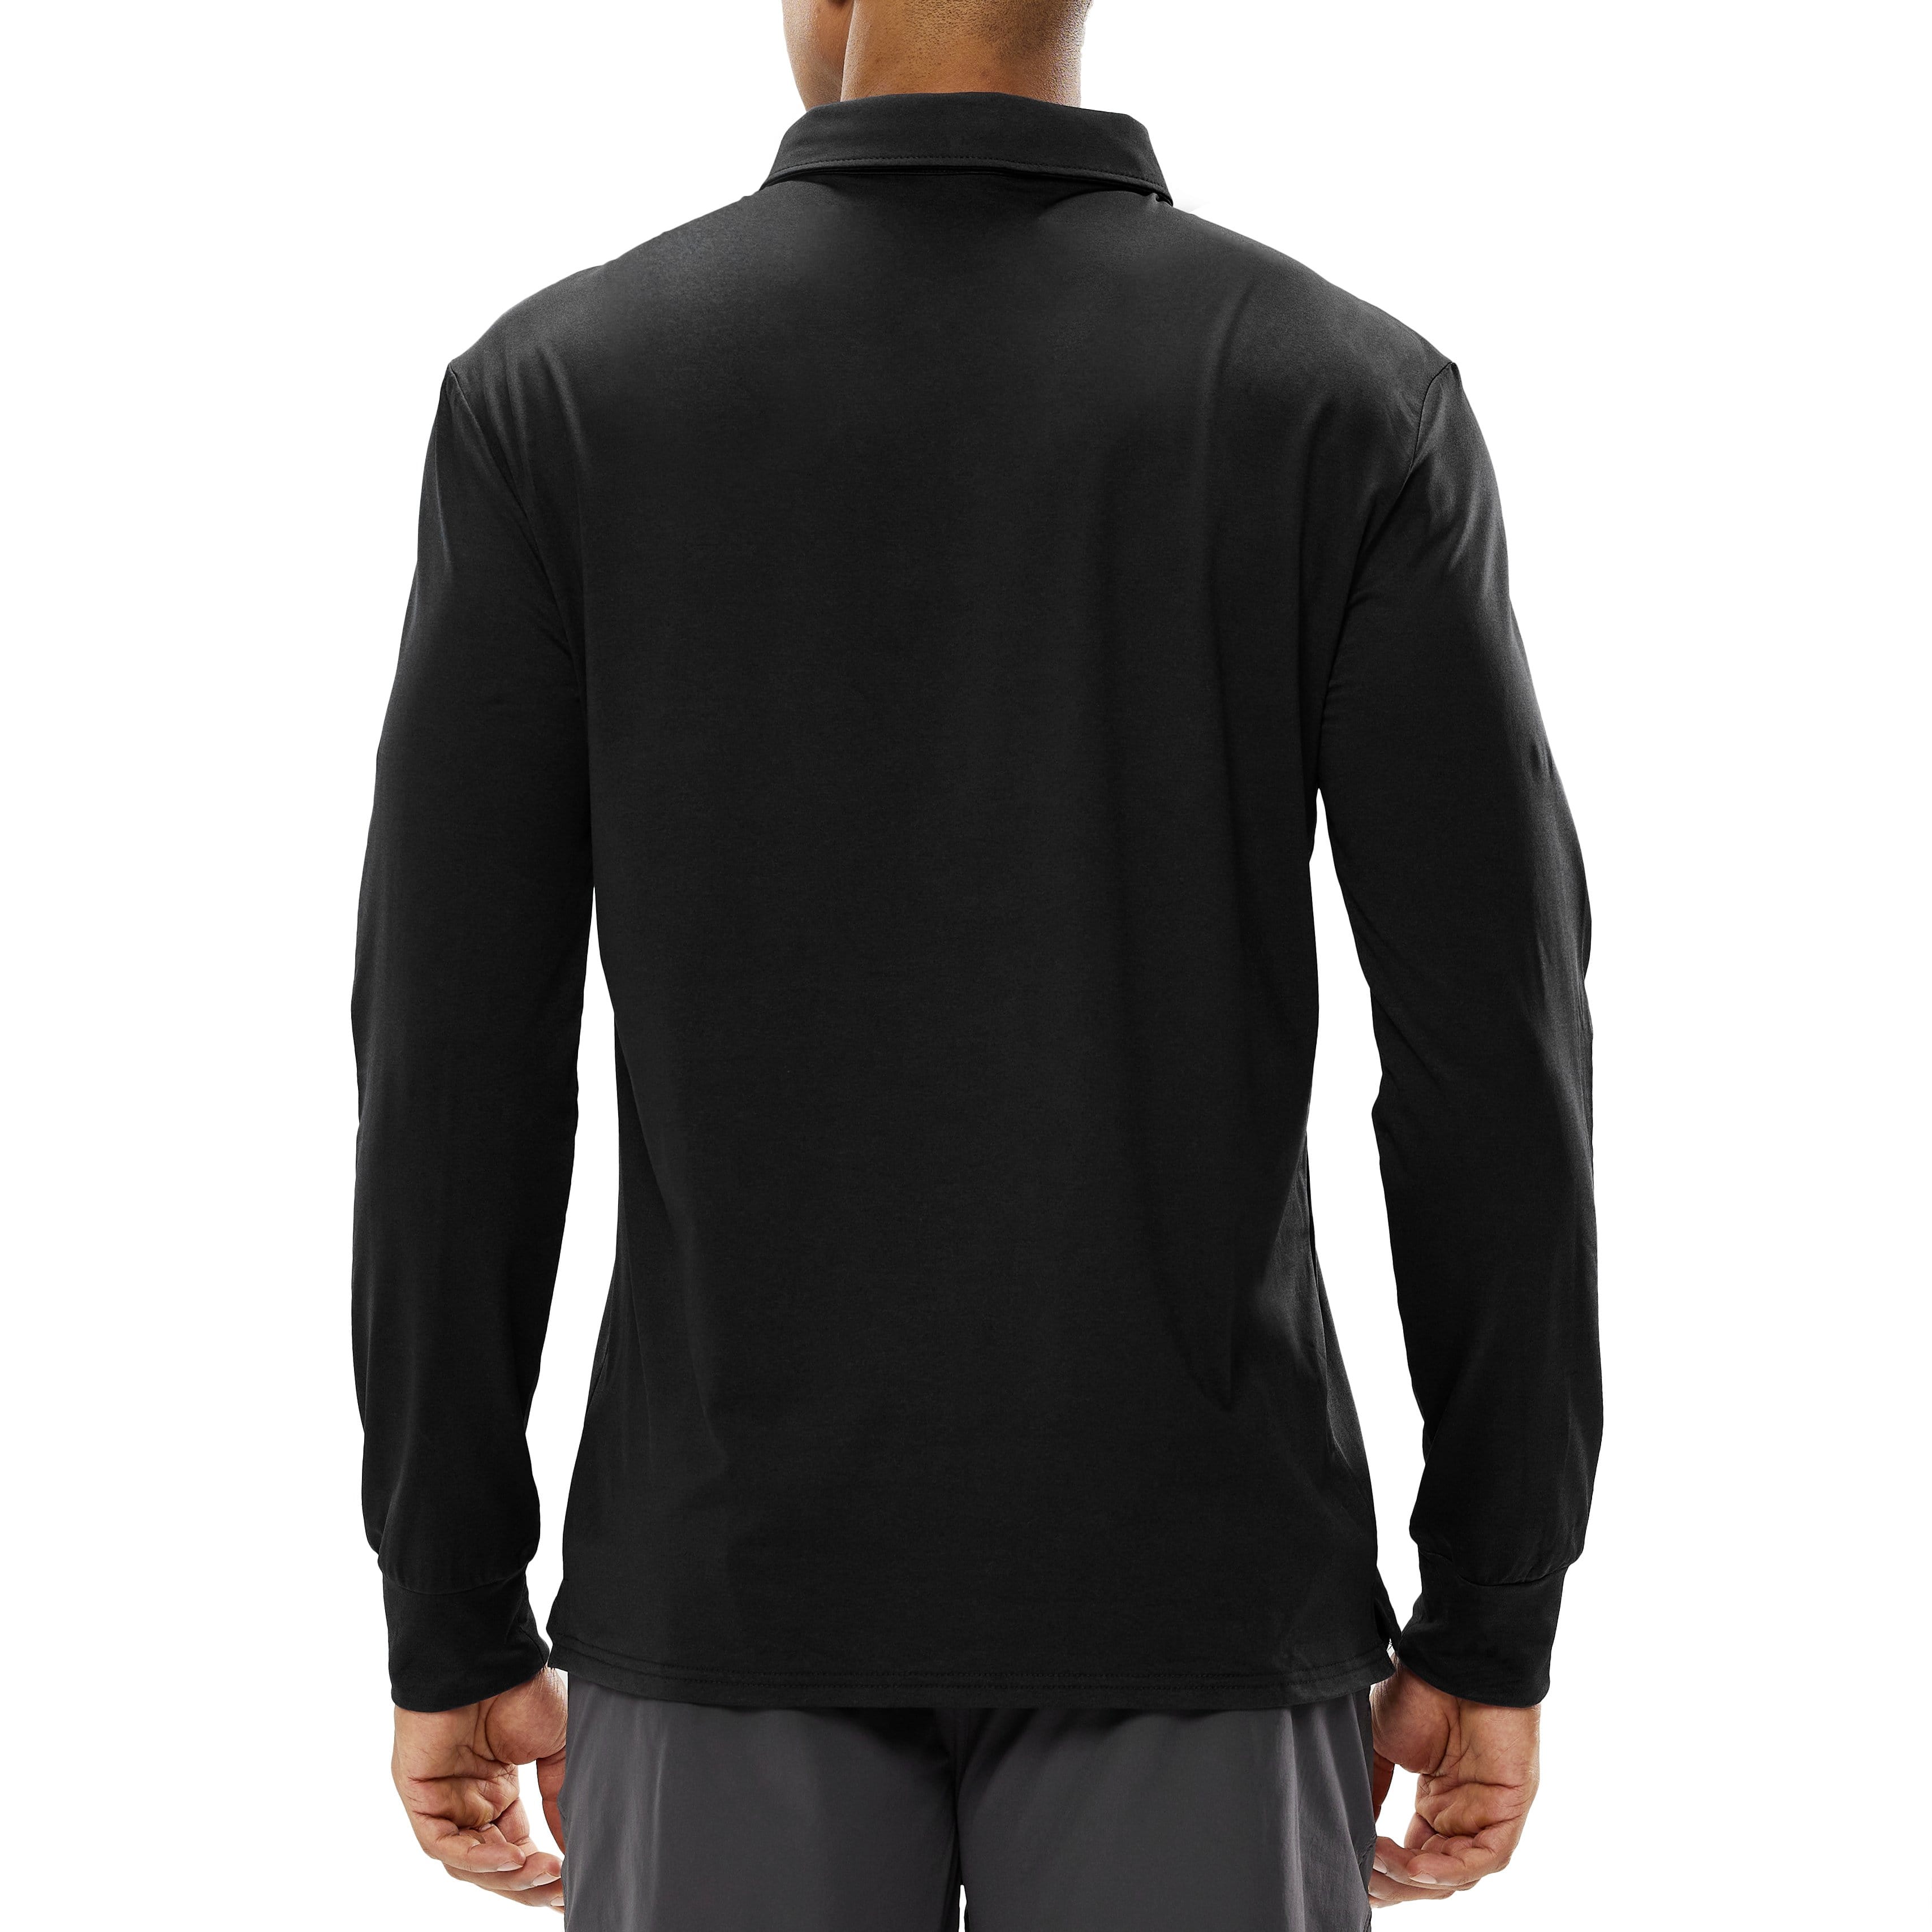 MIERSPORT Men's Golf Polo Shirts Quick Dry UV Sun Protection Shirt